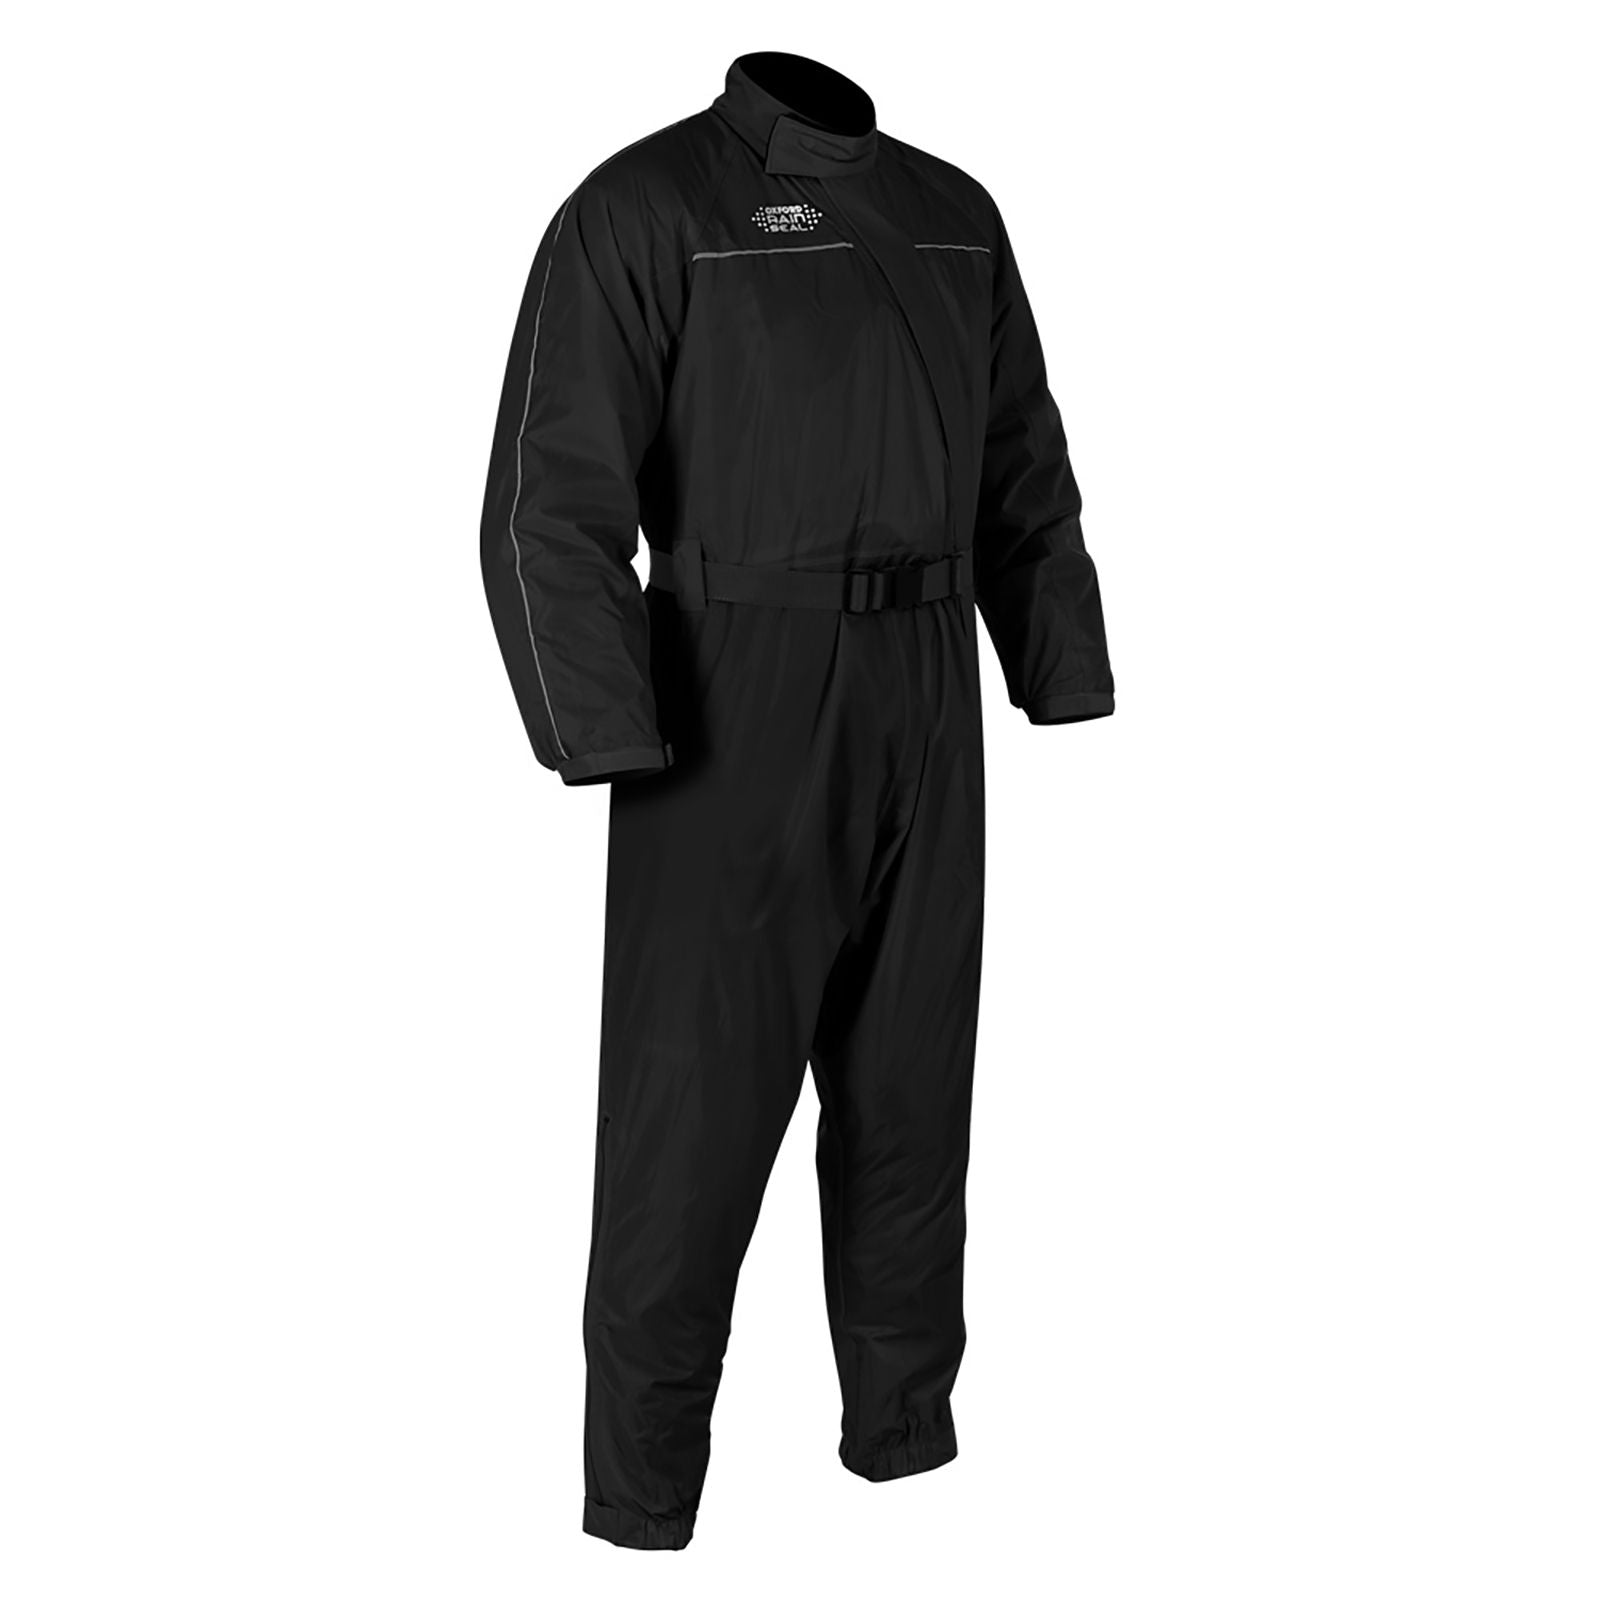 New OXFORD Rainseal Rain Suit - Black - Small #OXRM300S